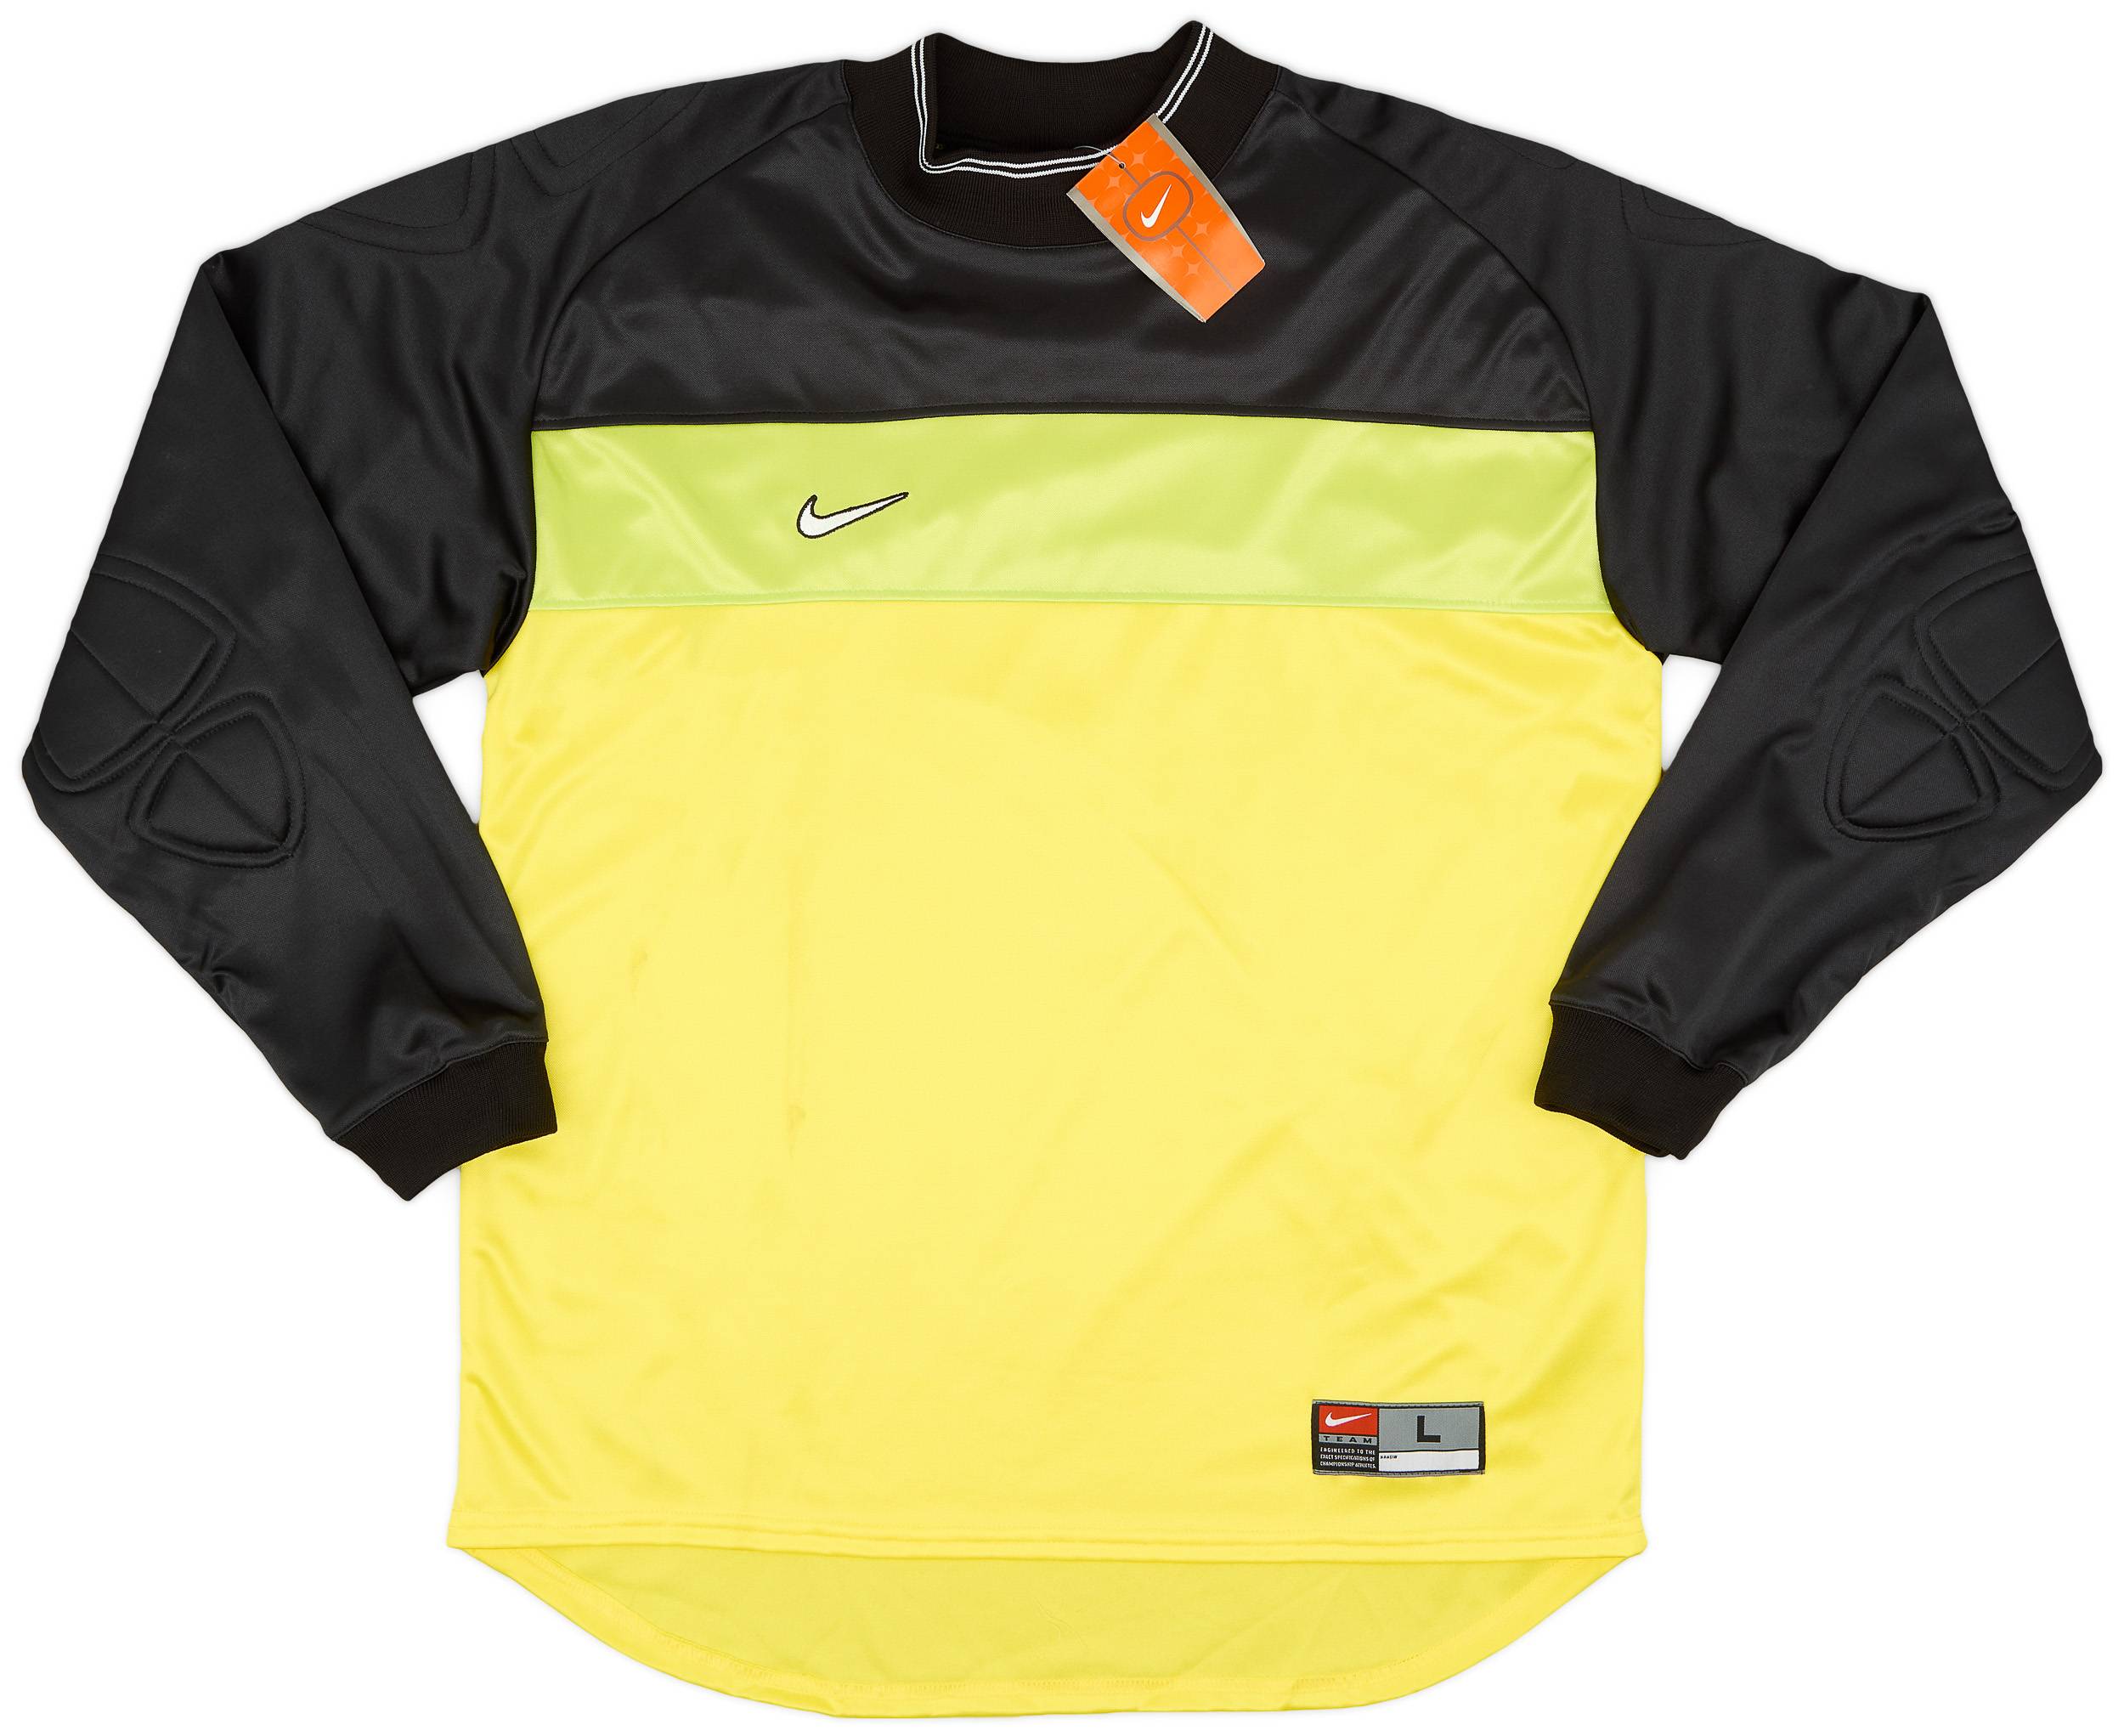 2000-01 Nike Template GK Shirt - 9/10